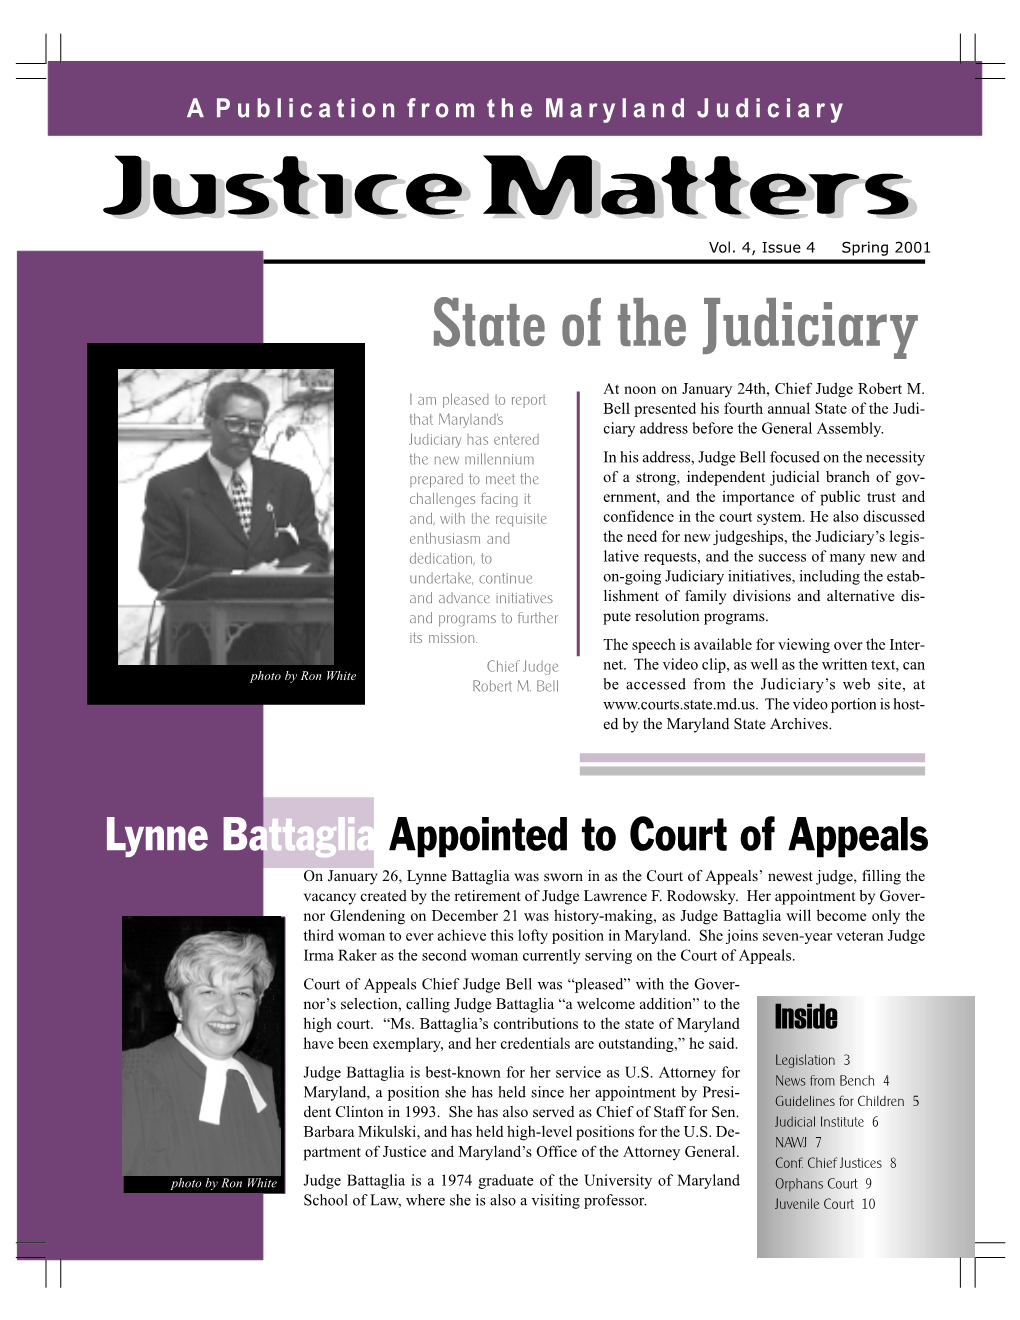 Justice Mattersmatters